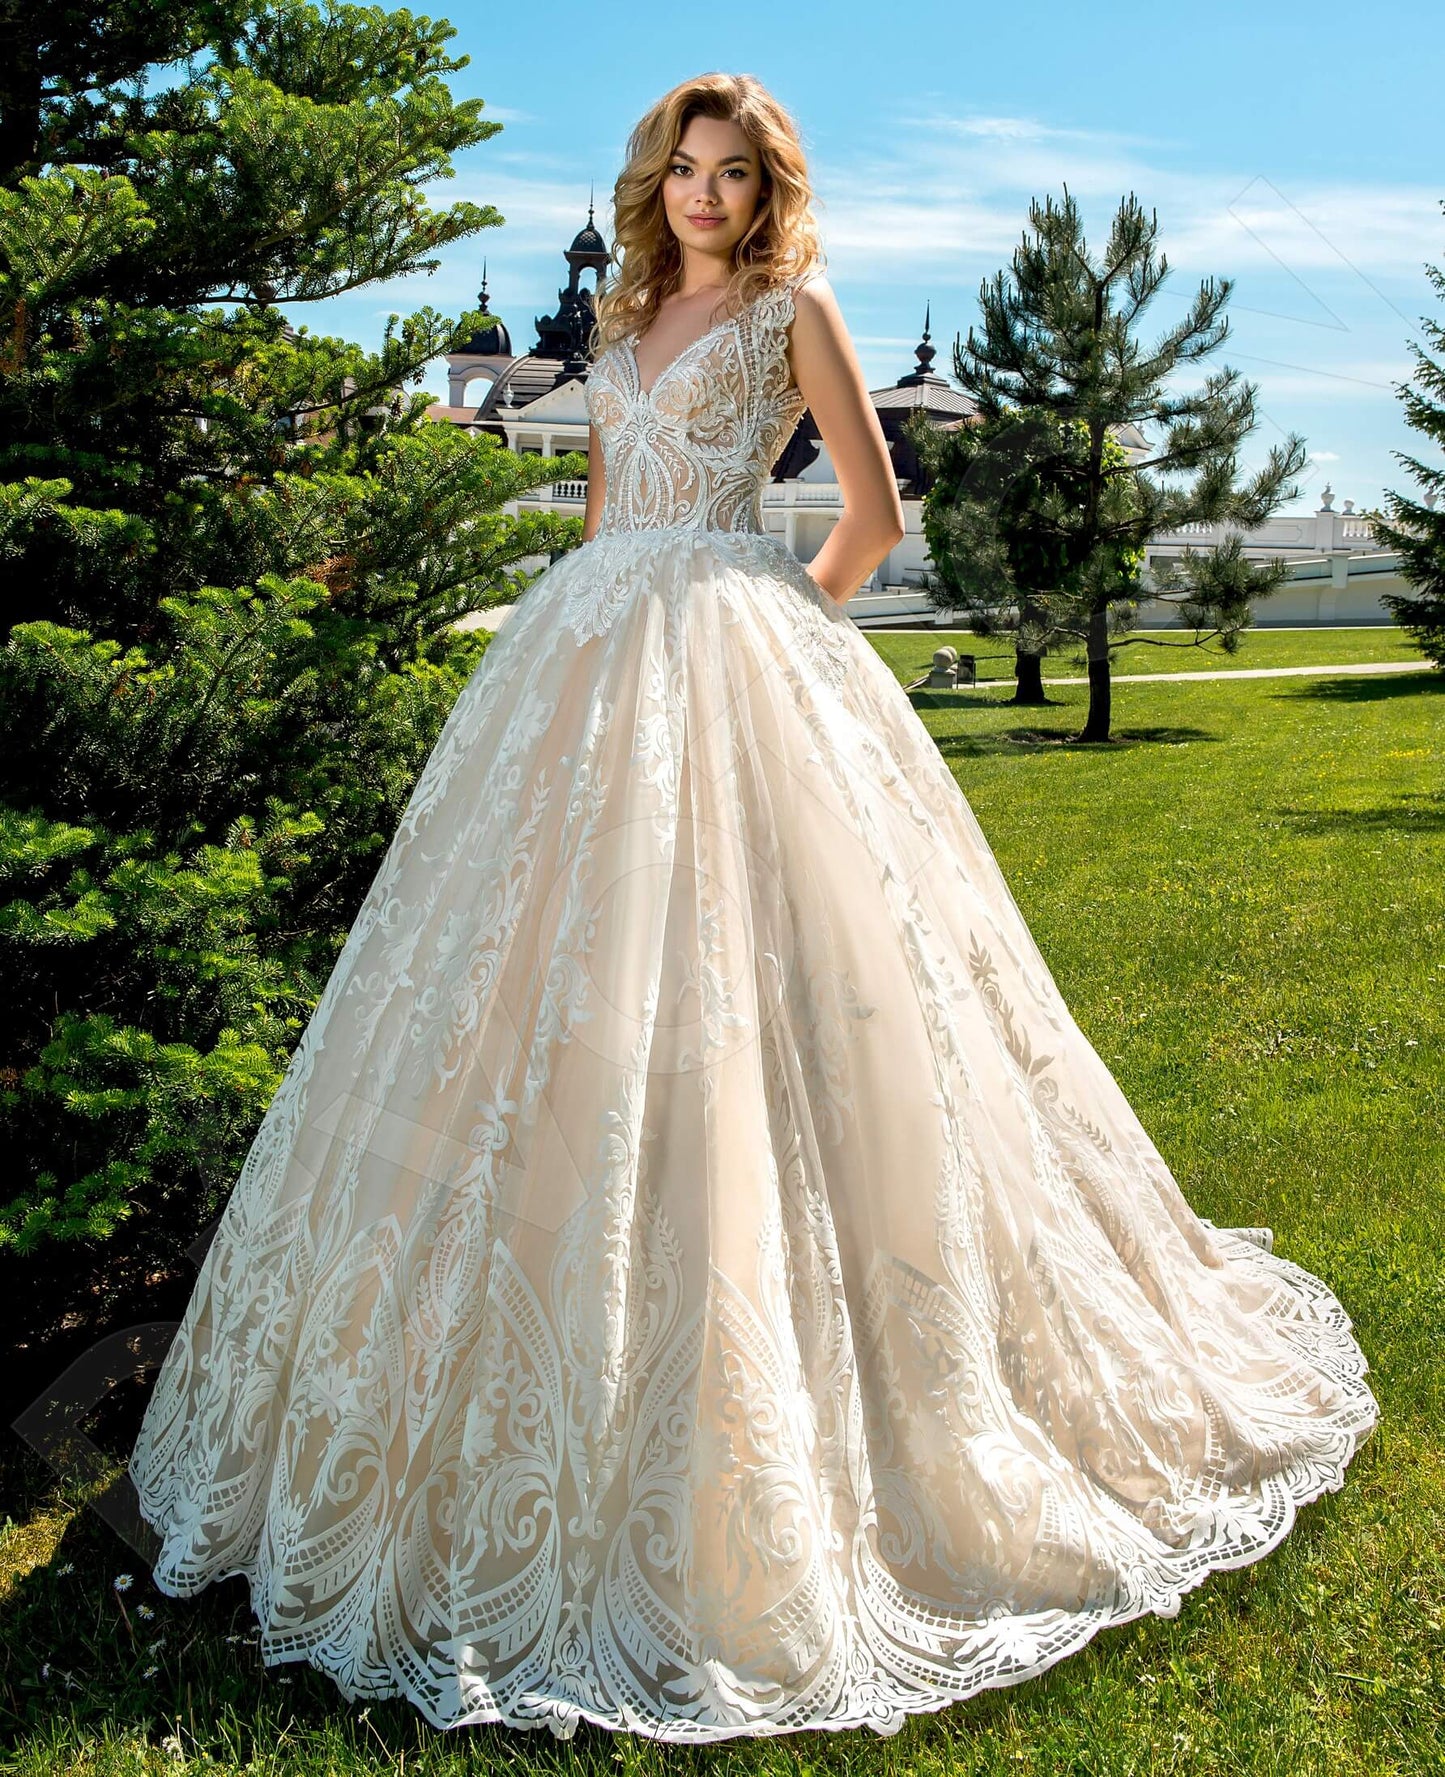 Michelle Open back Princess/Ball Gown Sleeveless Wedding Dress Front